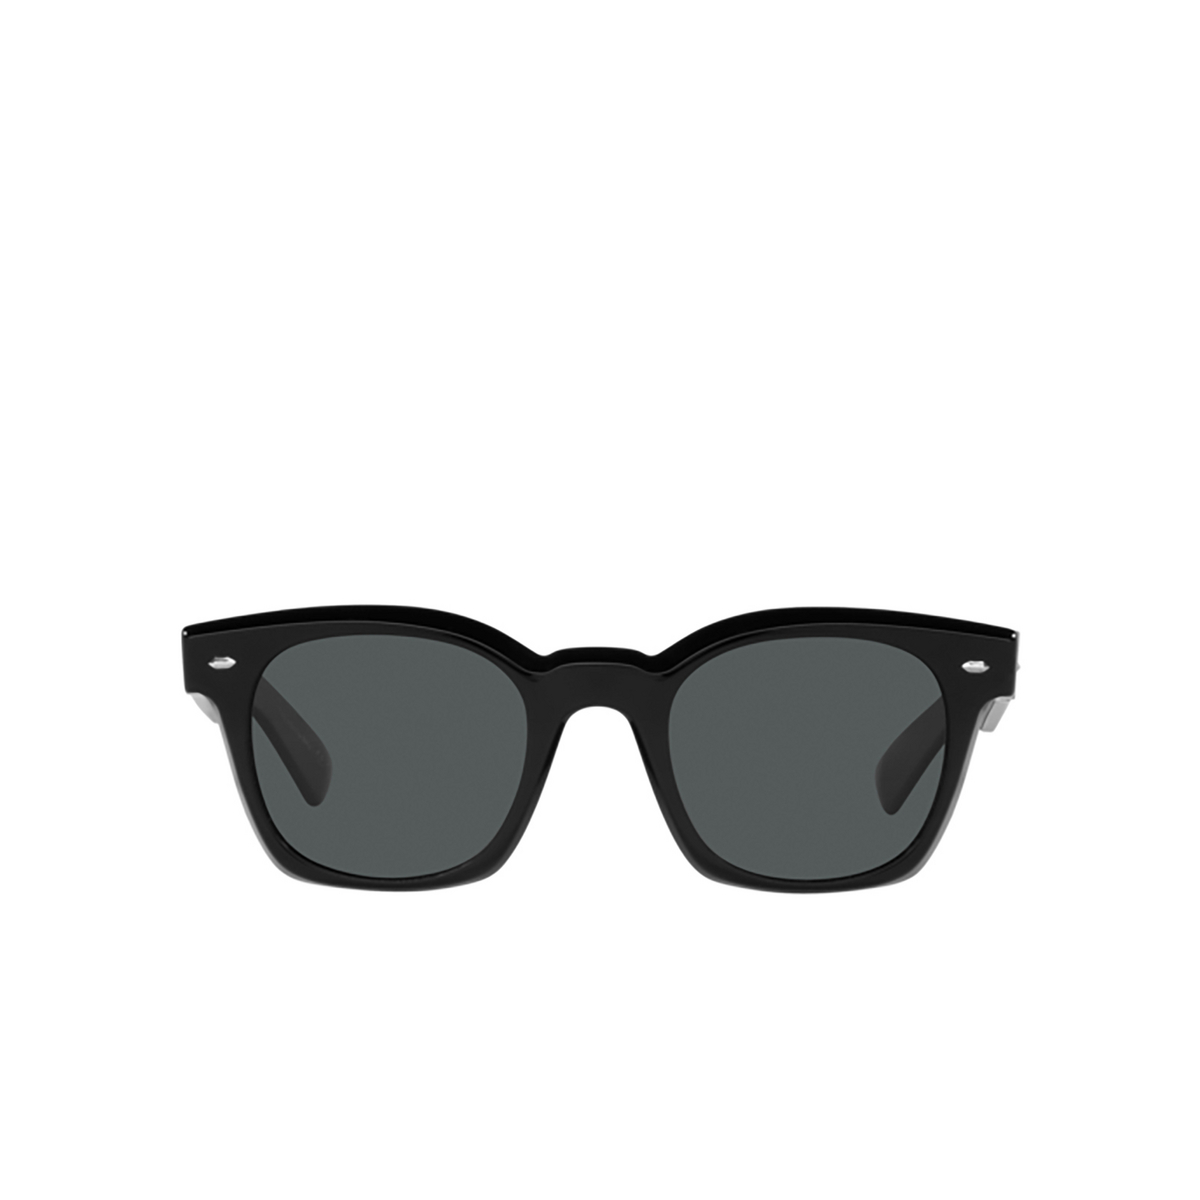 Oliver Peoples MERCEAUX Sunglasses 1492P2 Black - front view